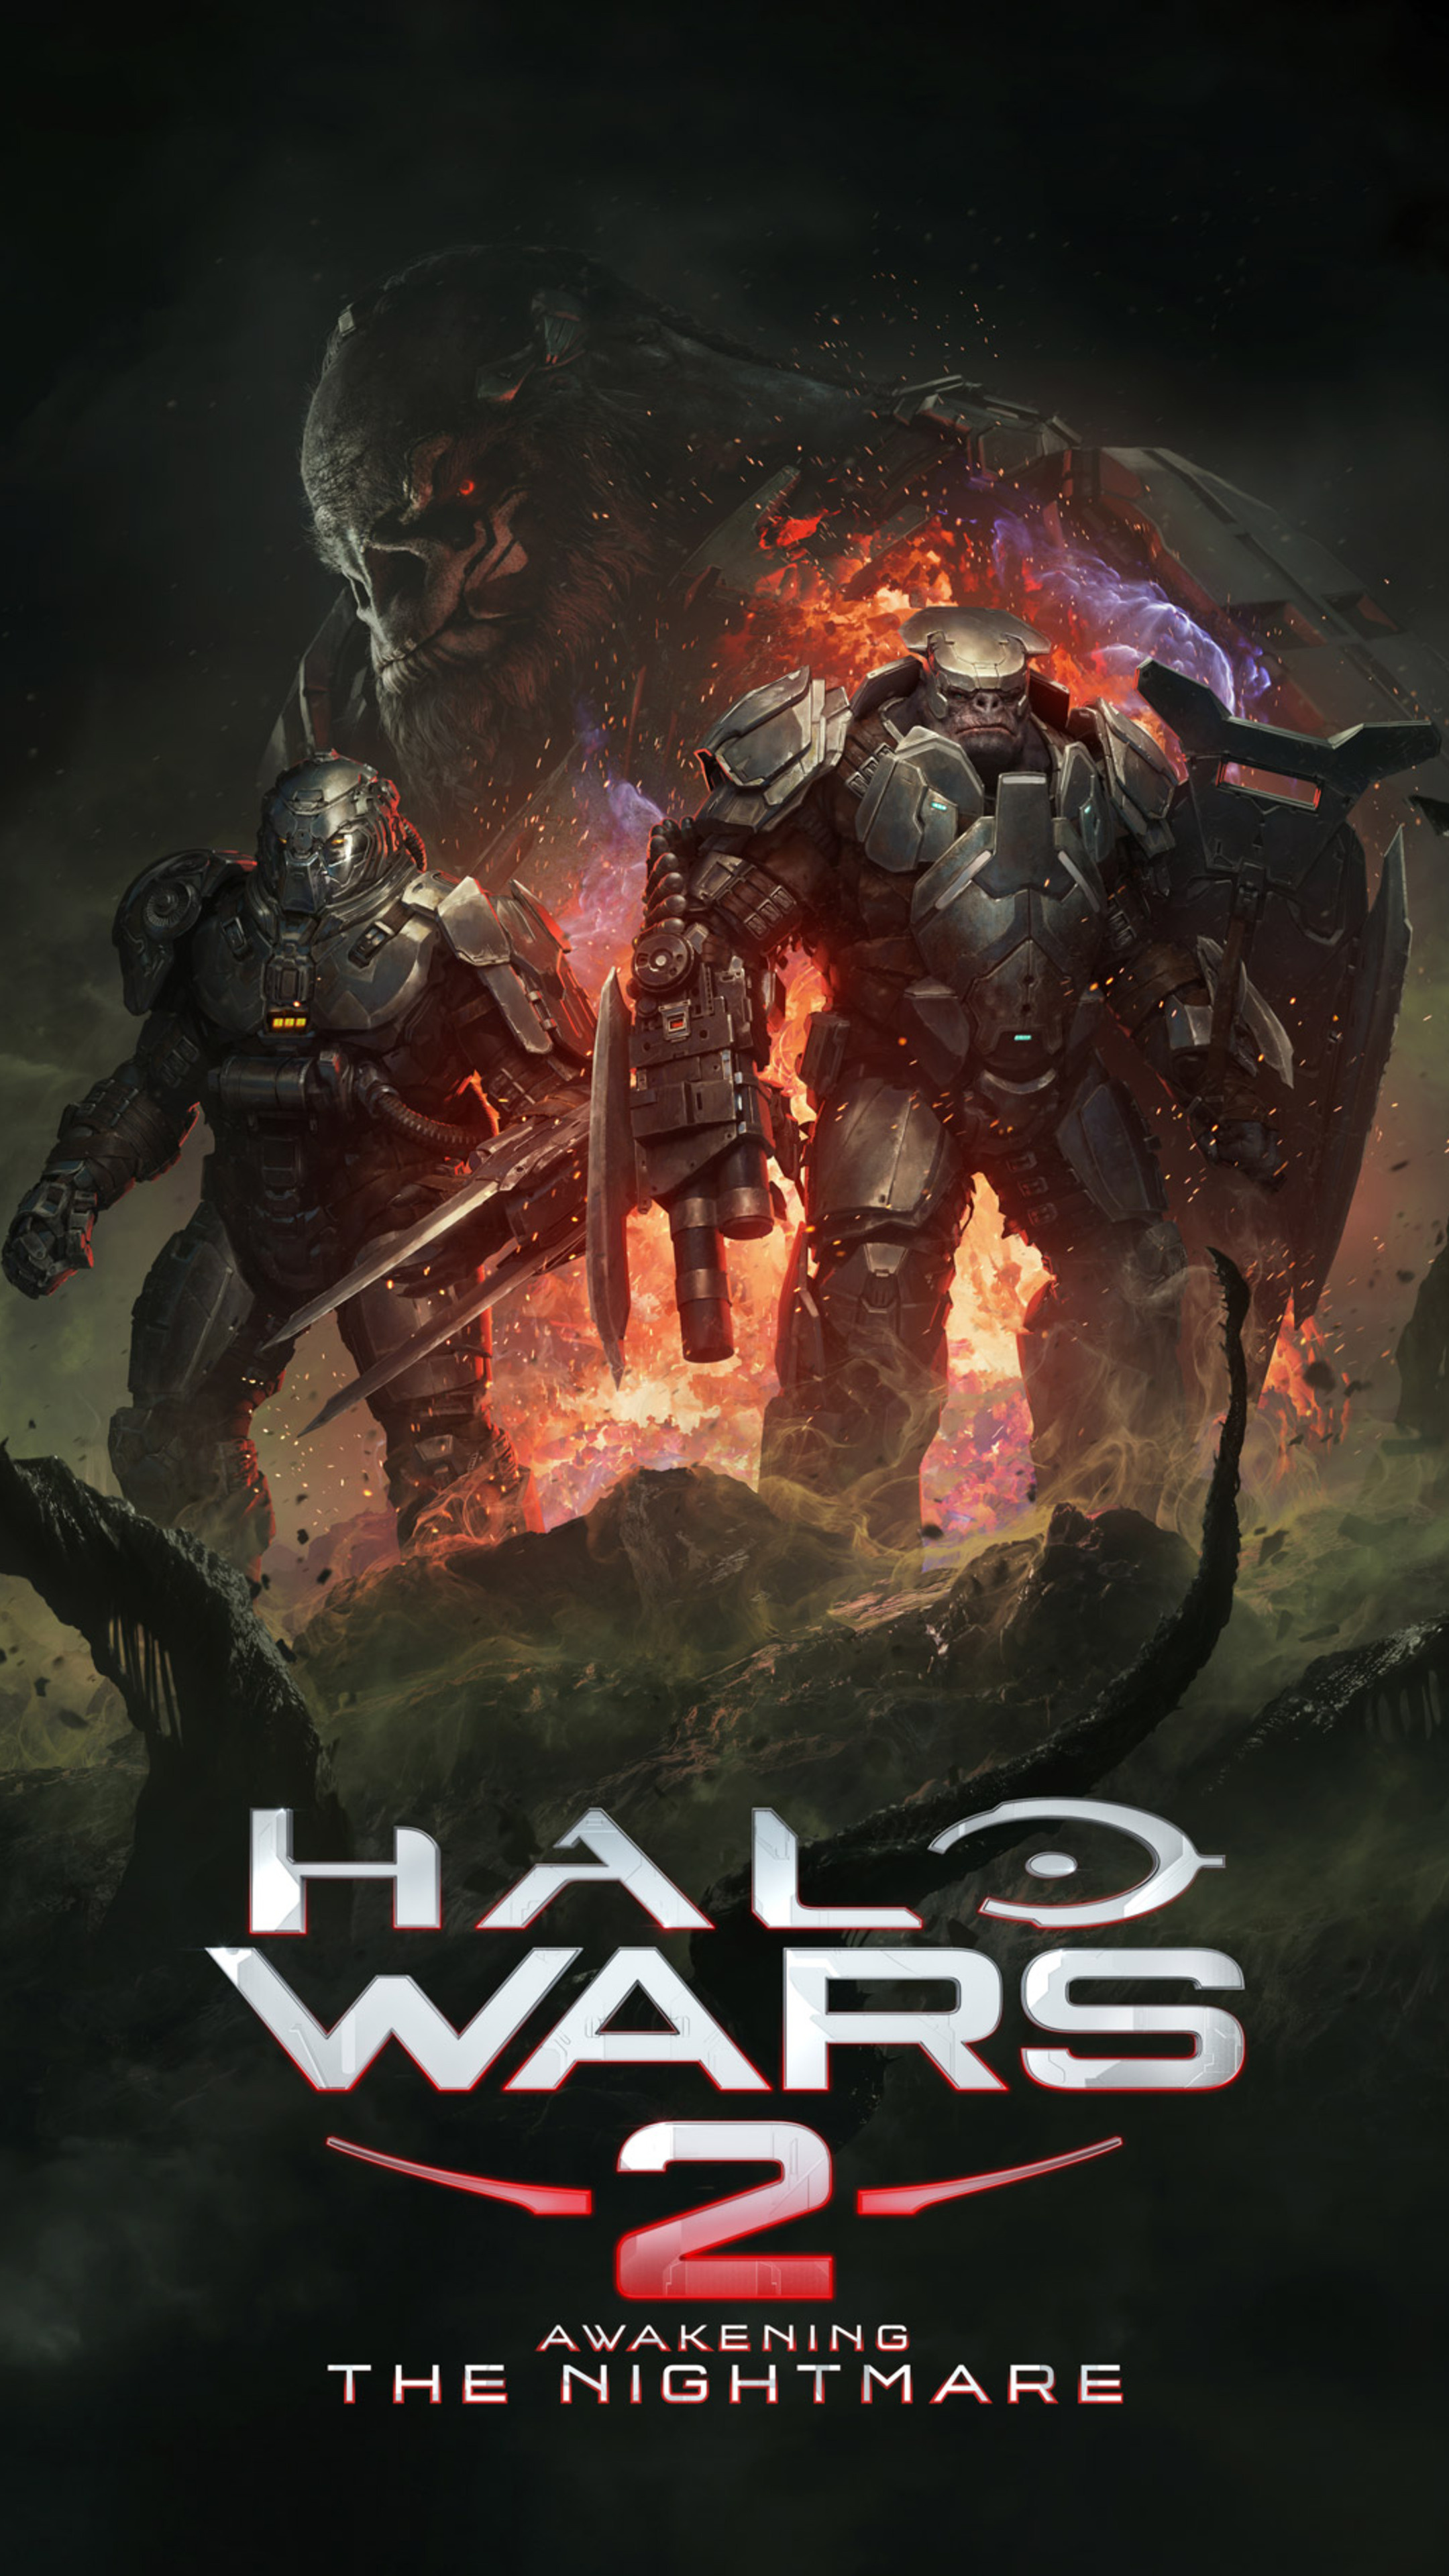 Halo Wars 2, Awakening the nightmare, Sony Xperia wallpapers, HD 4k resolution, 2160x3840 4K Phone